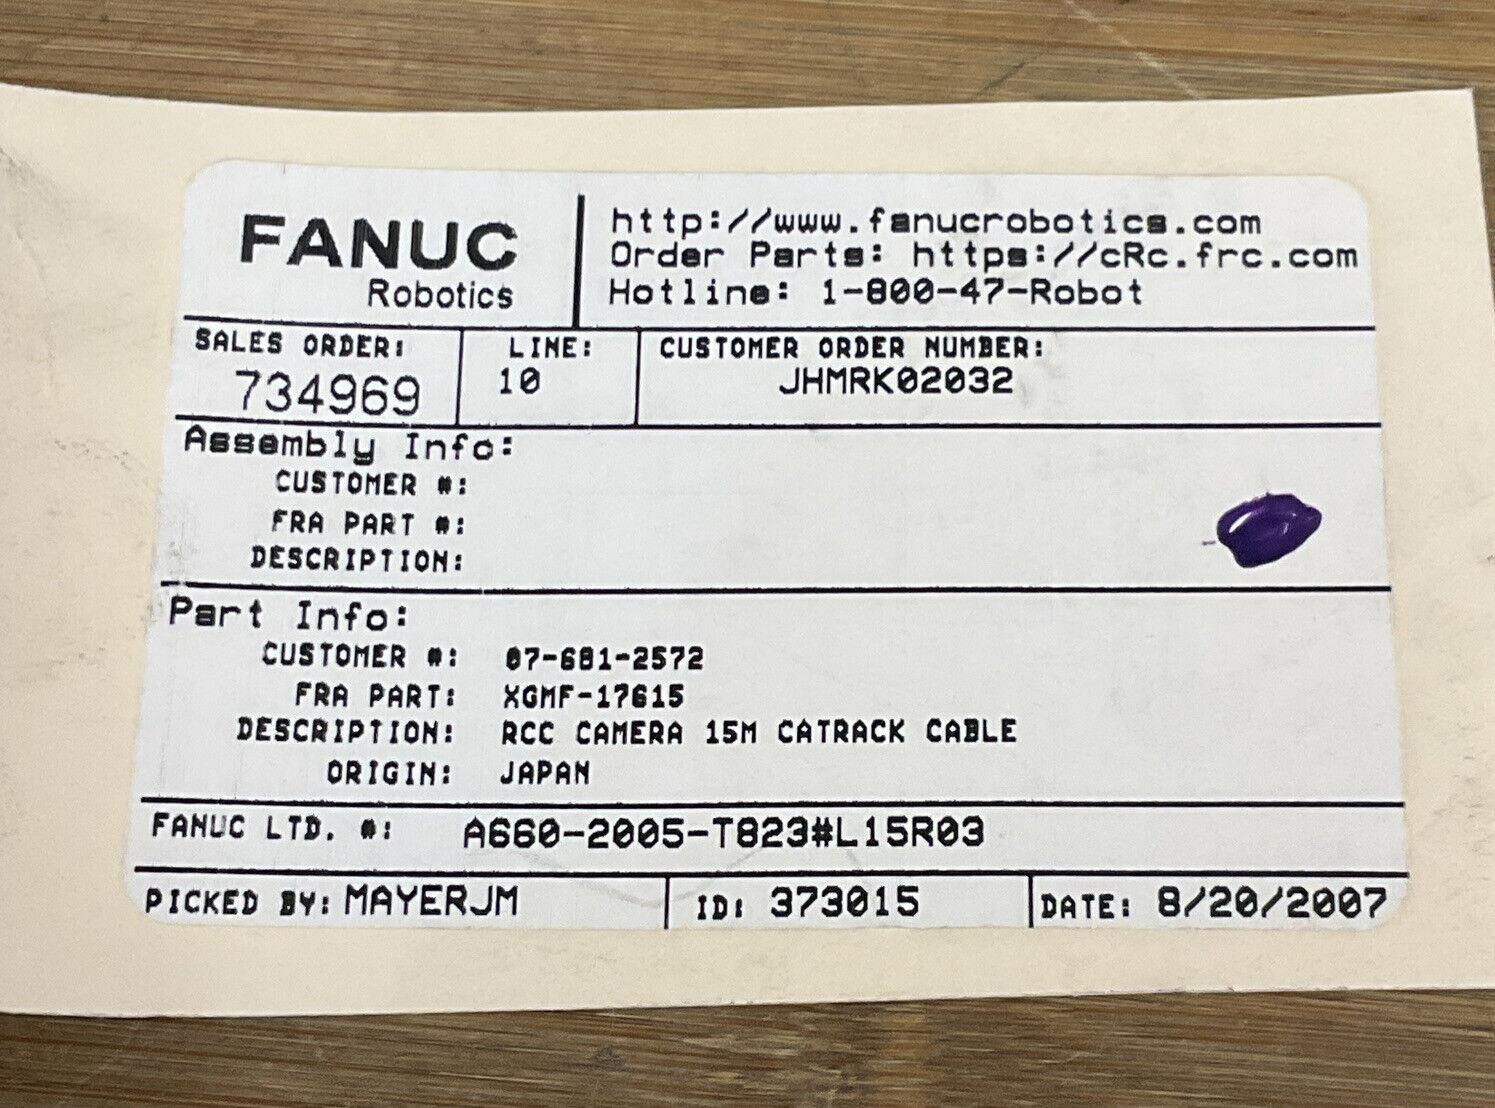 Fanuc A660-2005-T823#L15R03 RCC  Catrack Cable 15M (CBL144)